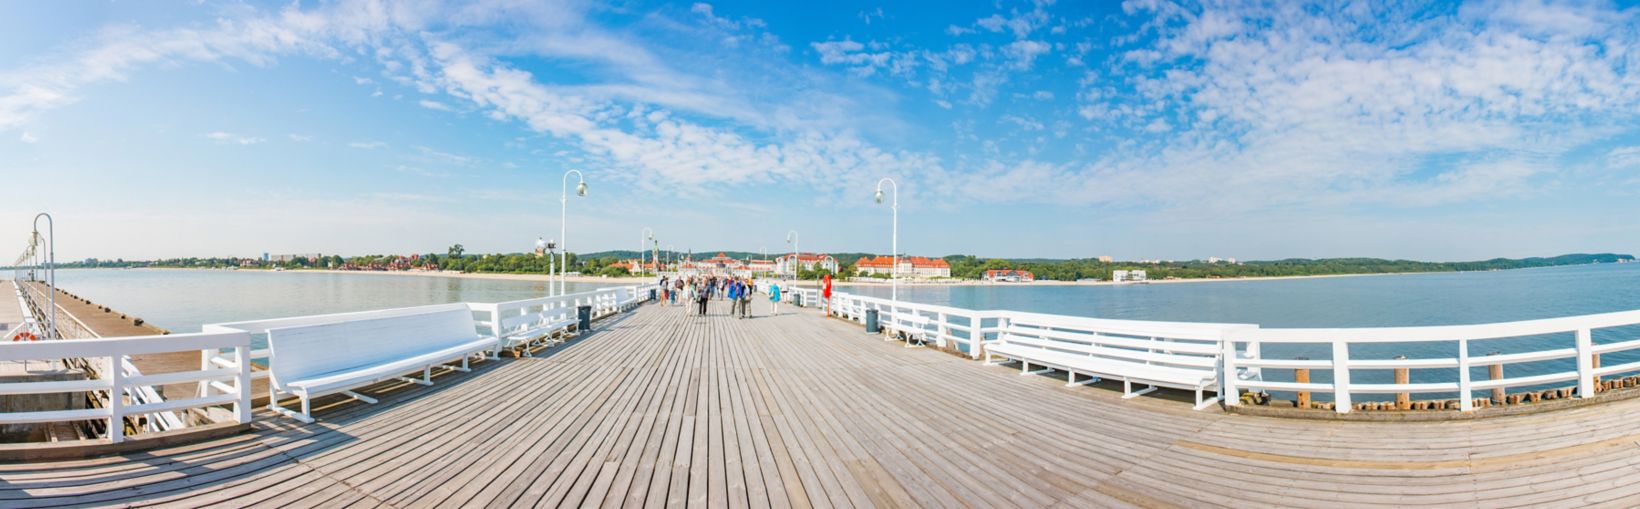 Inimesed jalutamas päikeselisel päeval Sopoti kail Gdynias Poolas